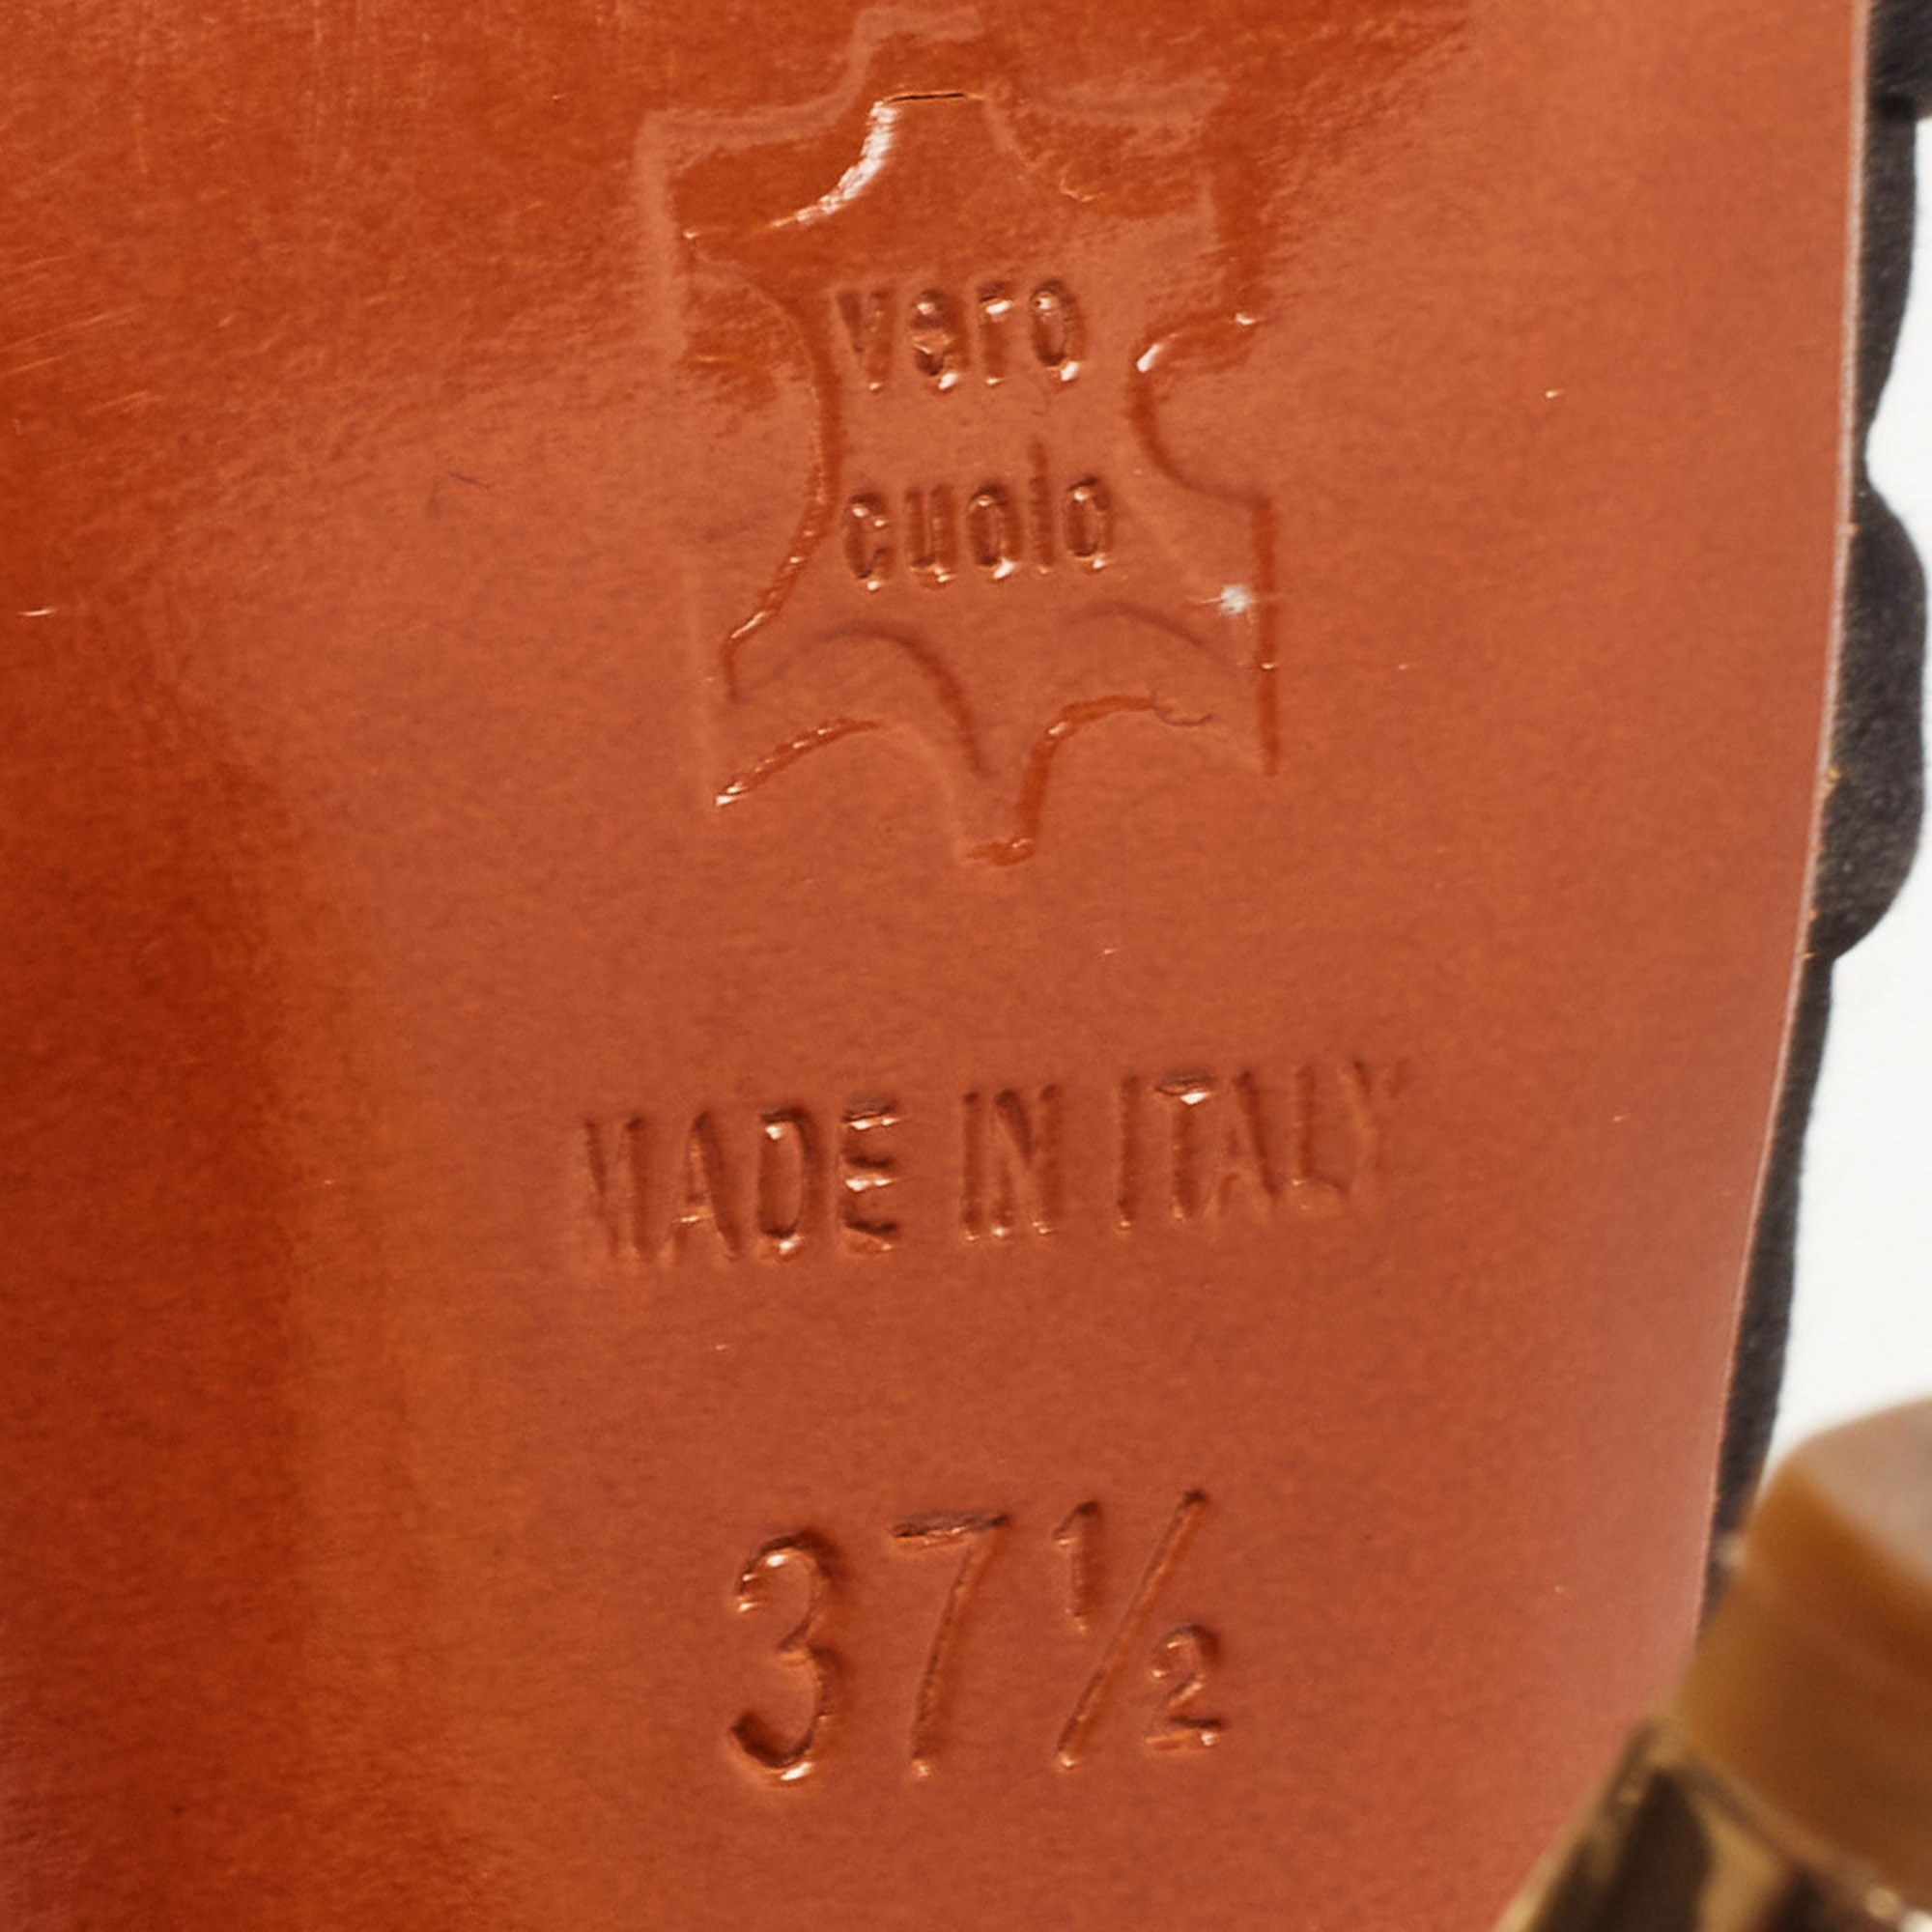 Lanvin Black Satin Pleated Open Toe Mules Size 37.5